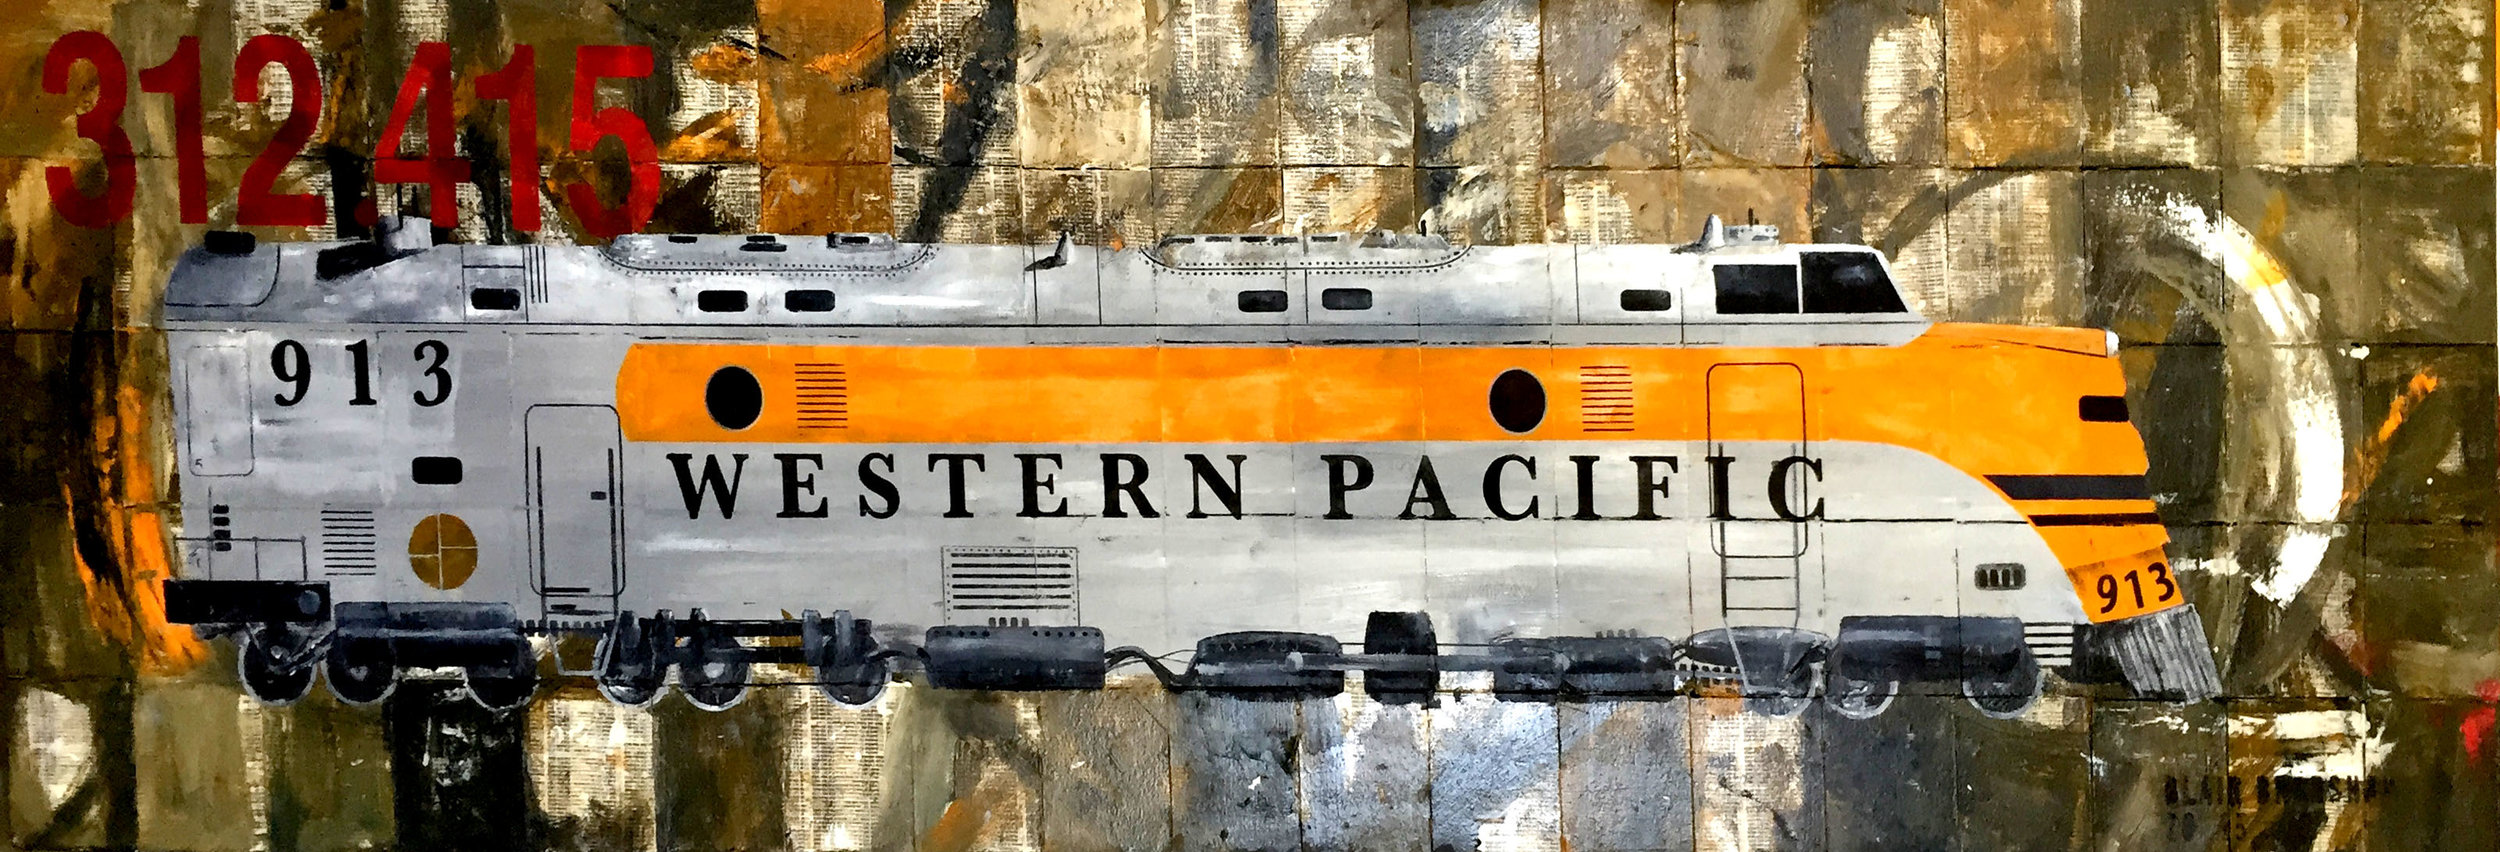 train_western_pacific_final.jpg